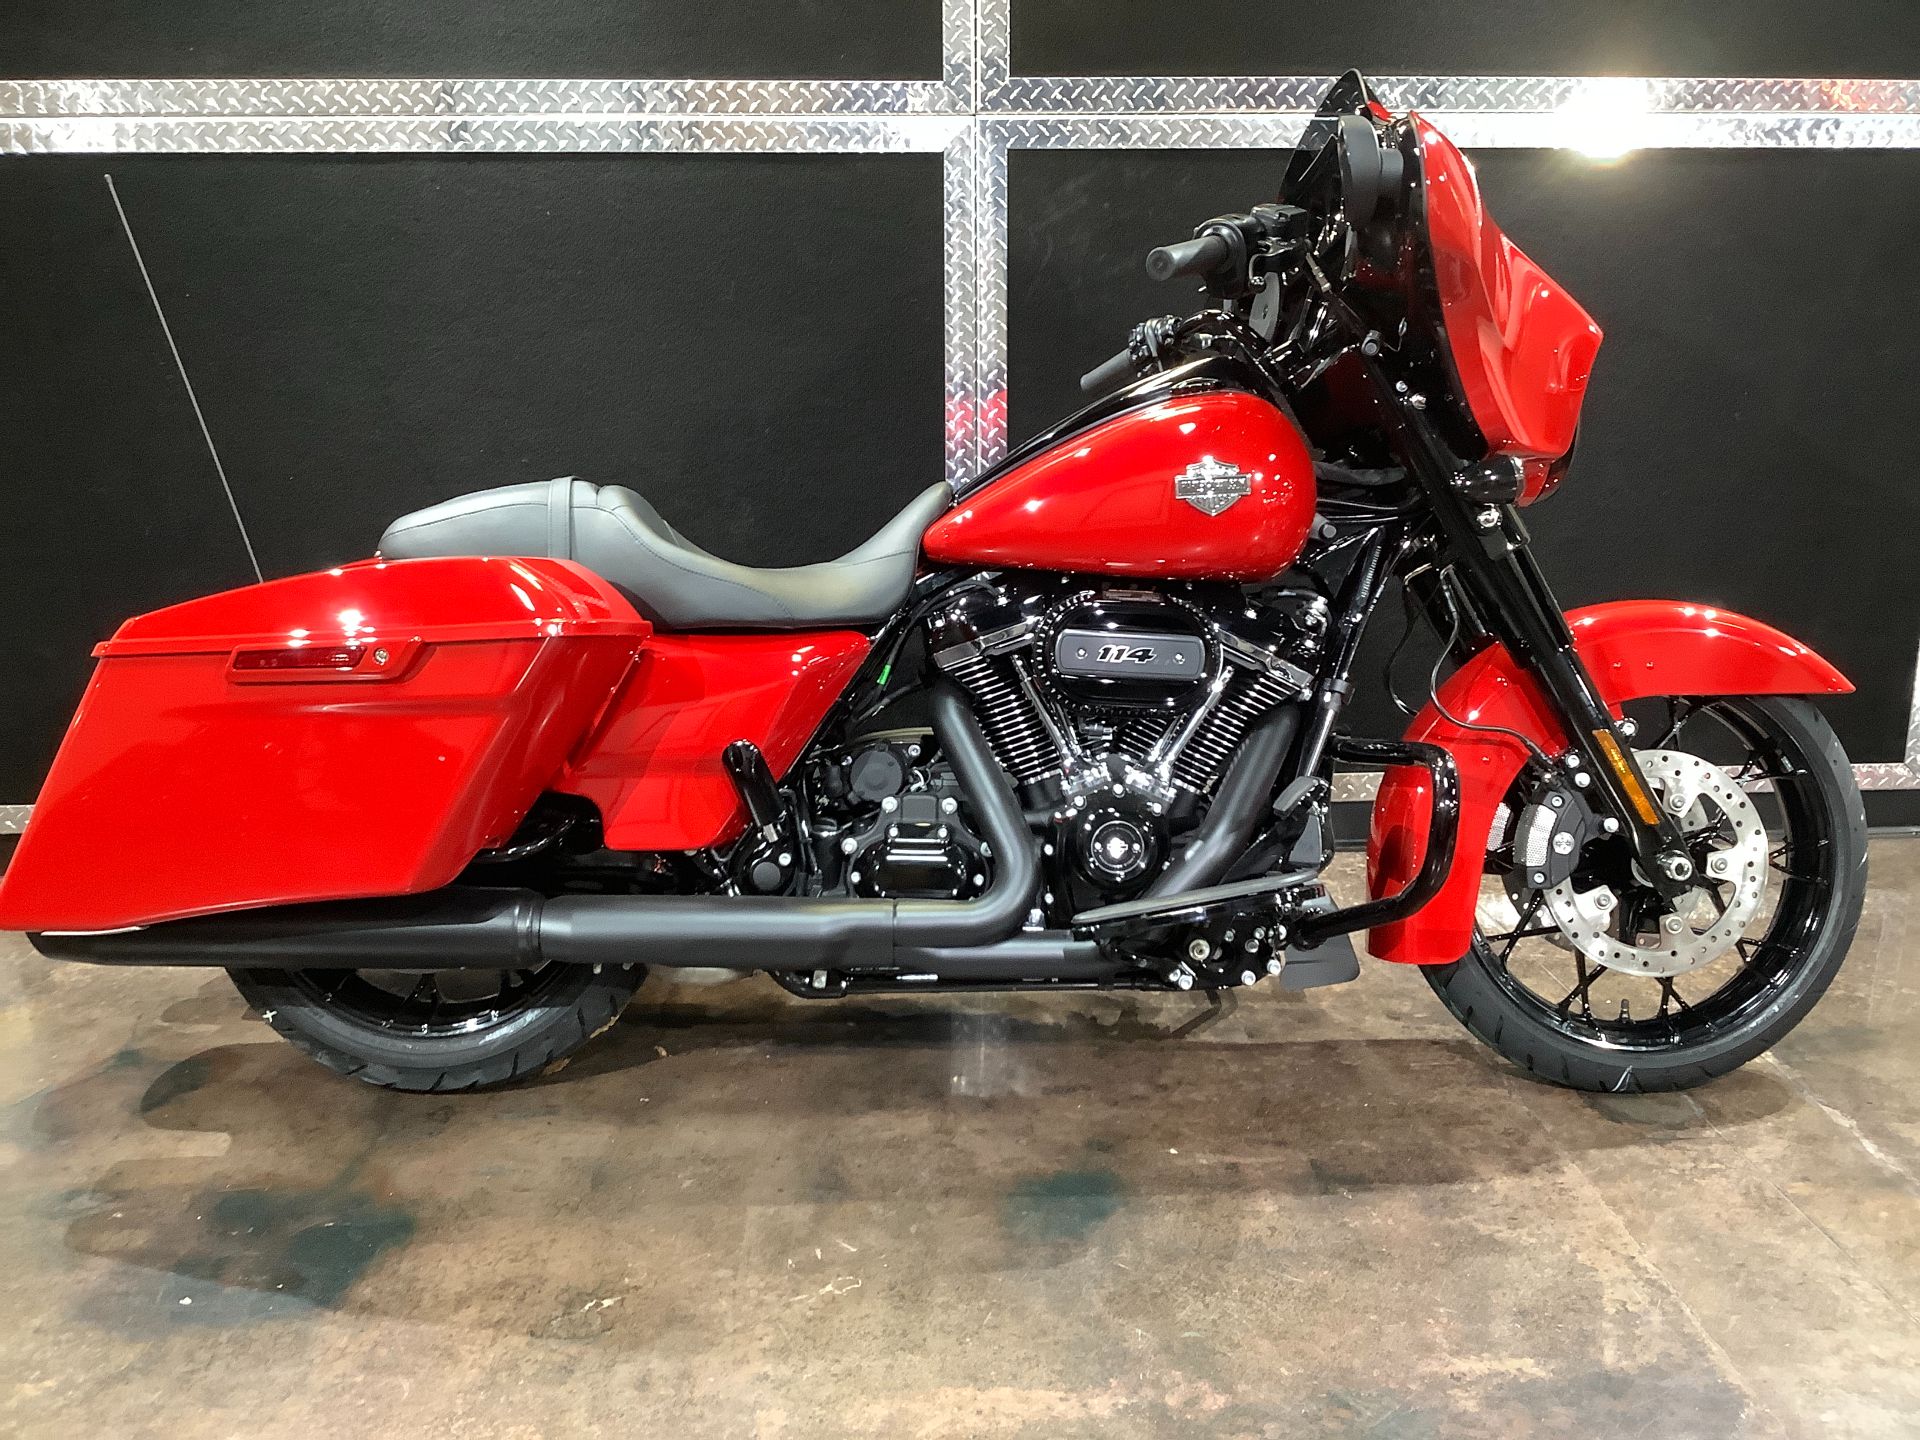 2022 Harley-Davidson Street Glide® Special in Burlington, Iowa - Photo 16